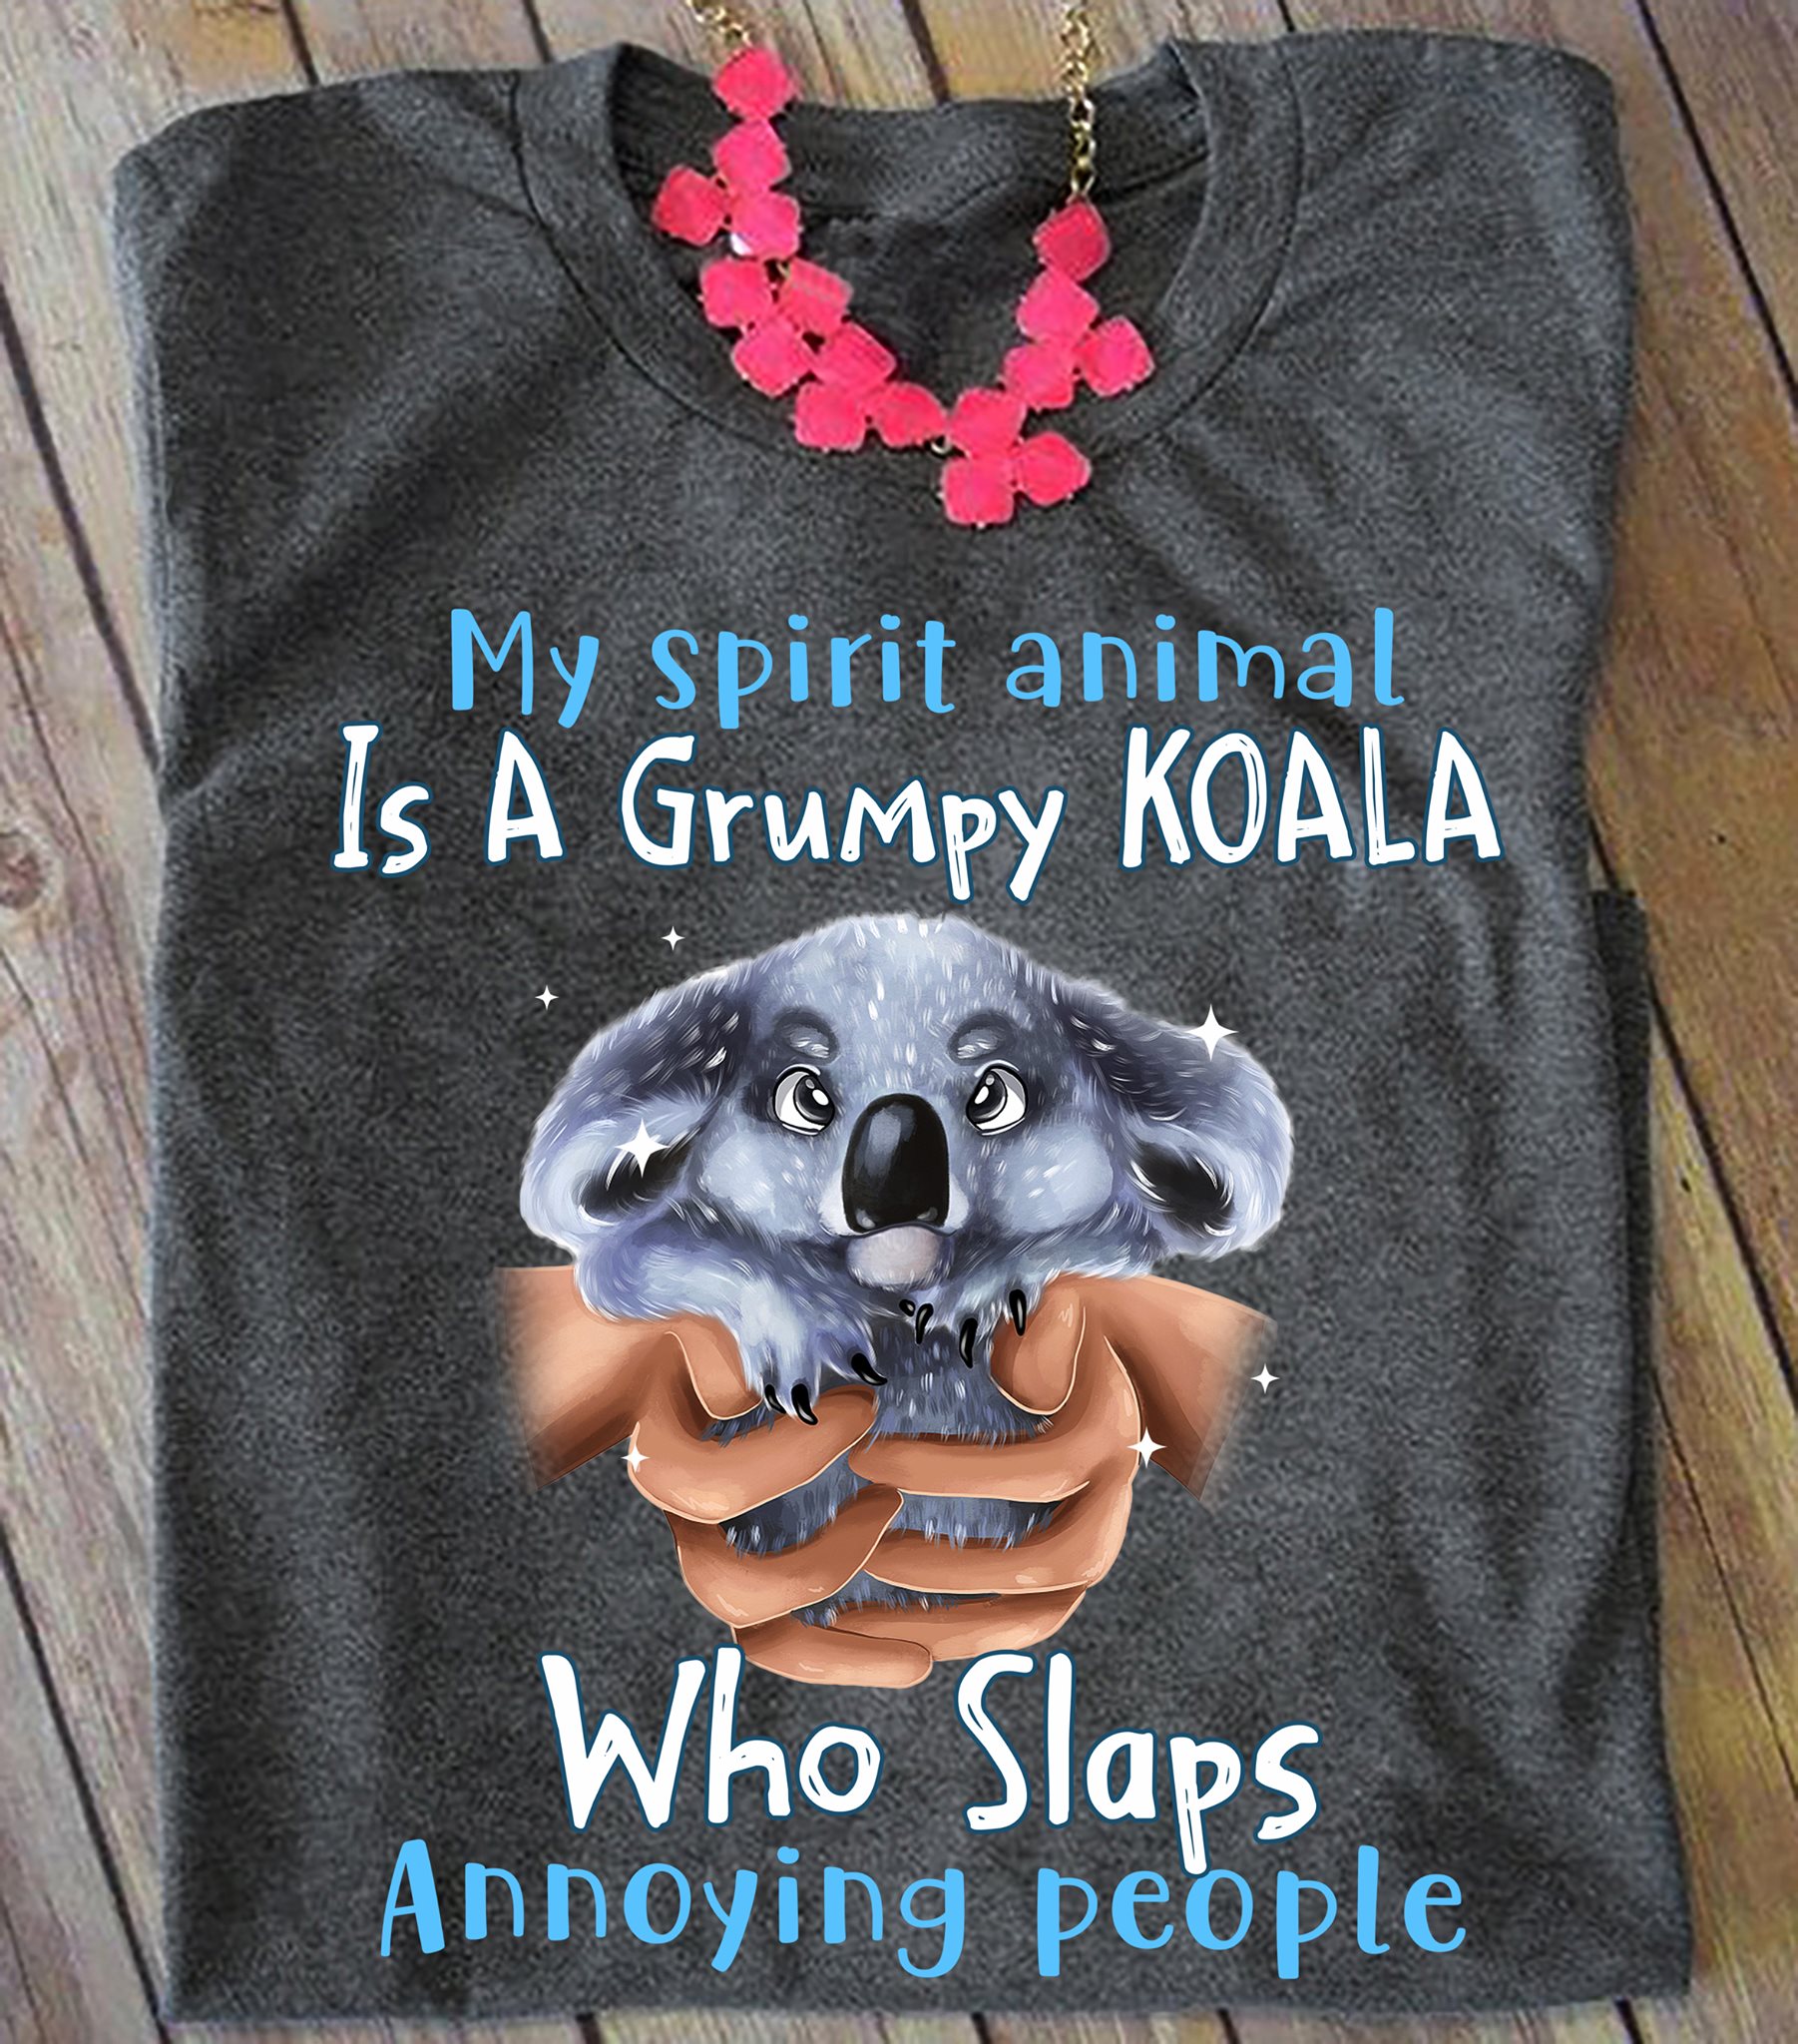 My spirit animal is a grumpy Koala who slaps annoying people